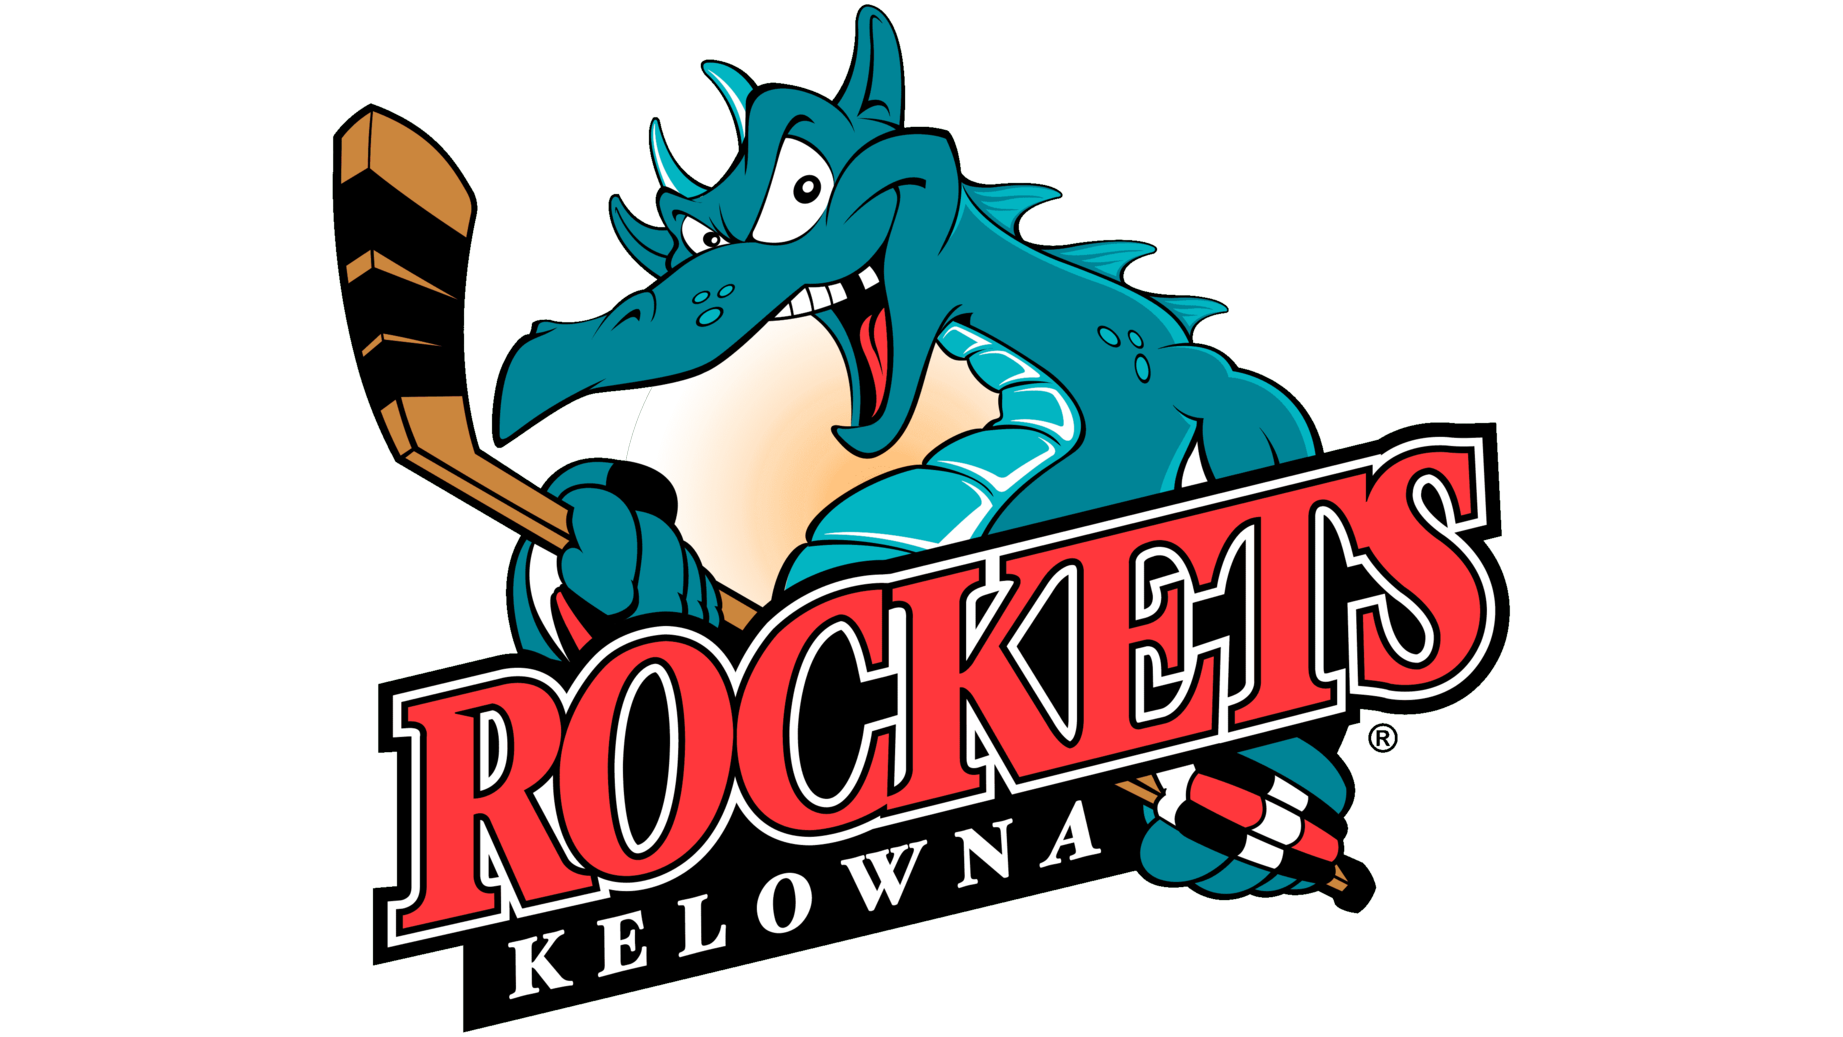 Kelowna rockets logo